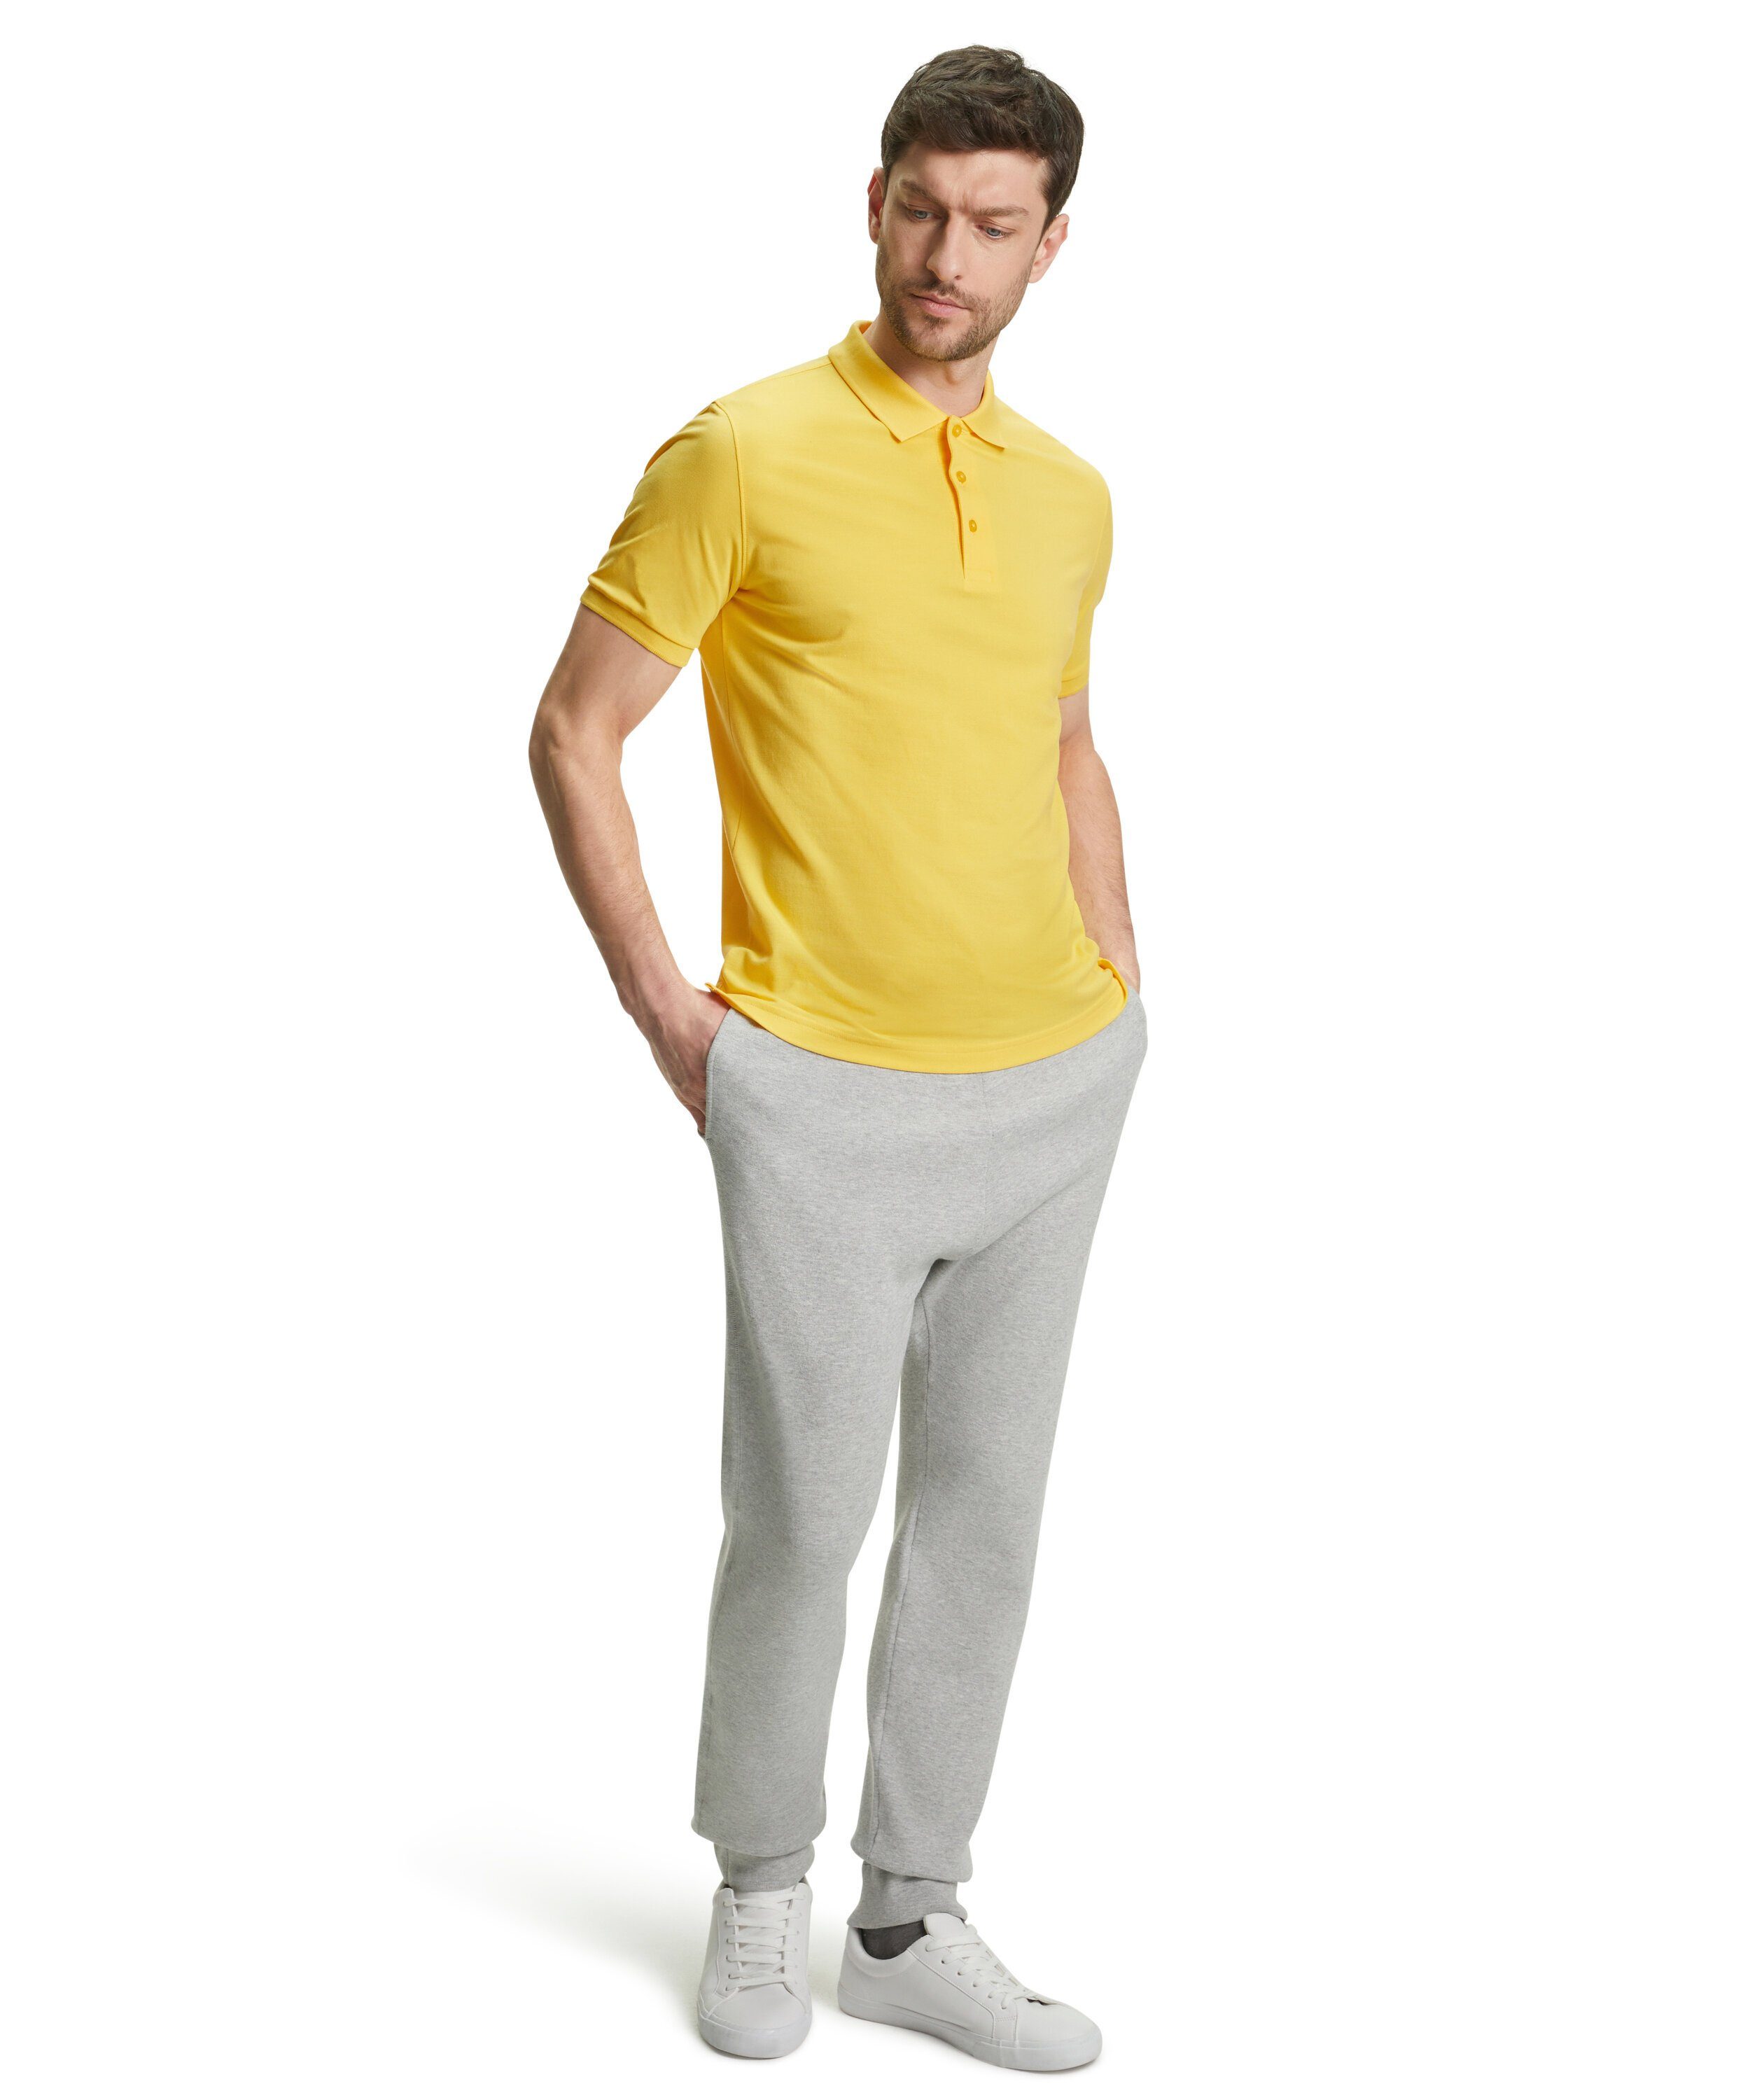 FALKE Pima-Baumwolle sun Poloshirt bright (1031) aus hochwertiger